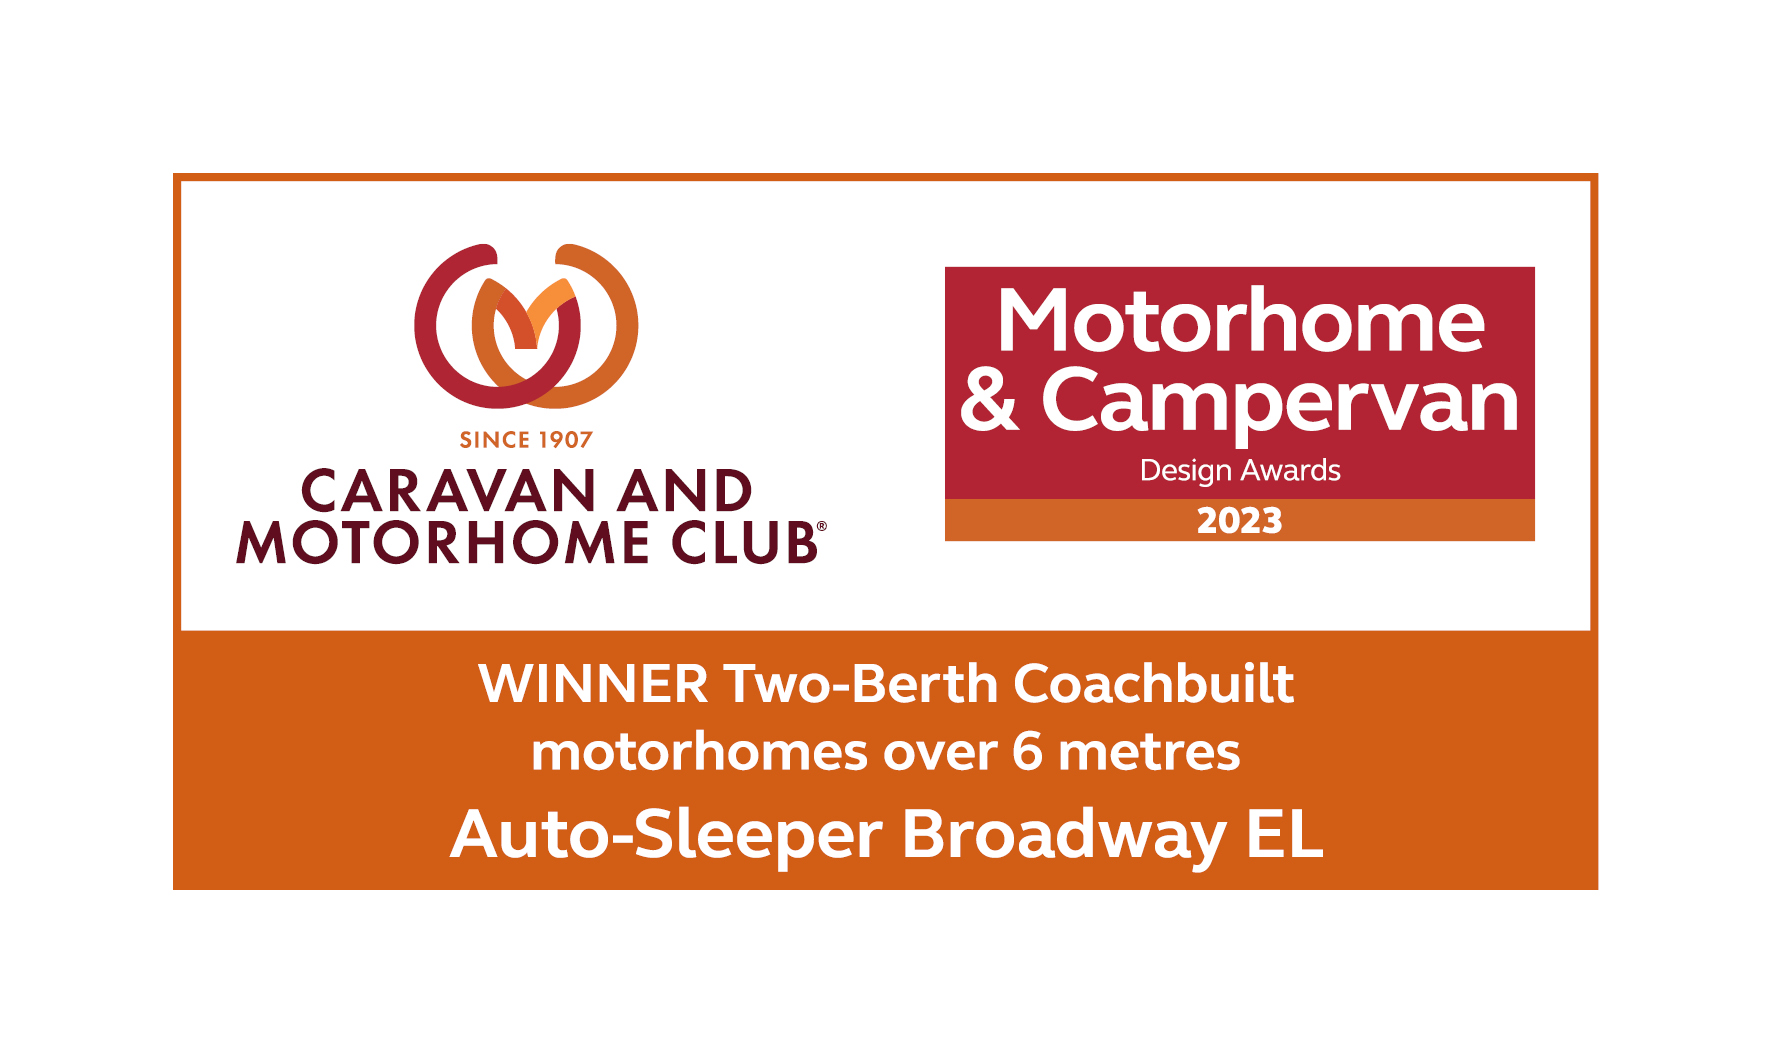 Two-Berth Coachbuilt Motorhomes Over 6 Metres awards Broadway EL Winner